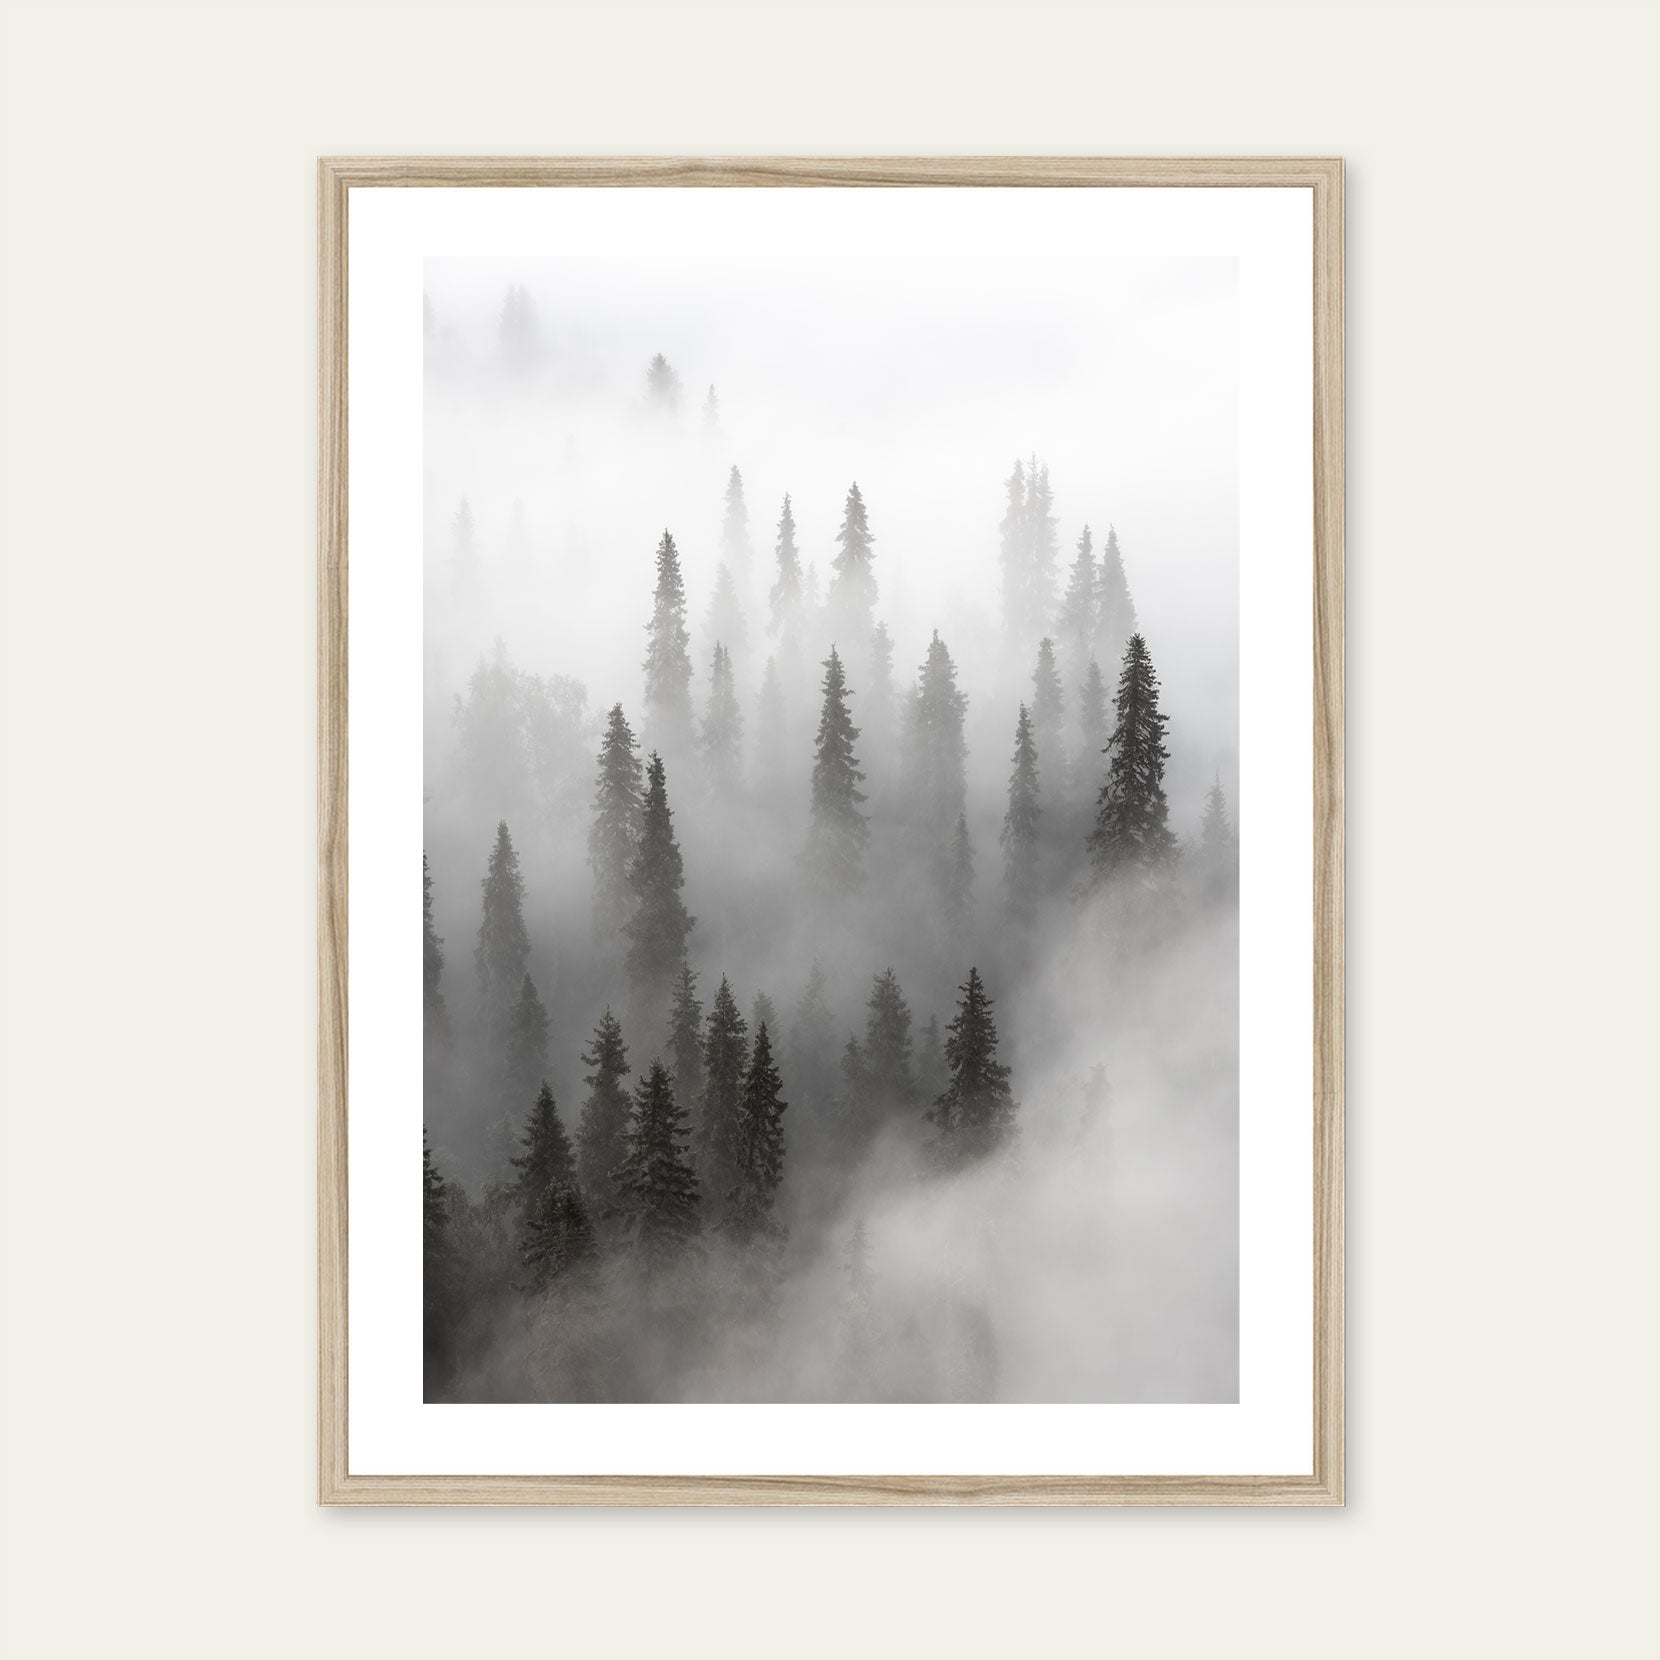 A framed print of a forest veiled in fog